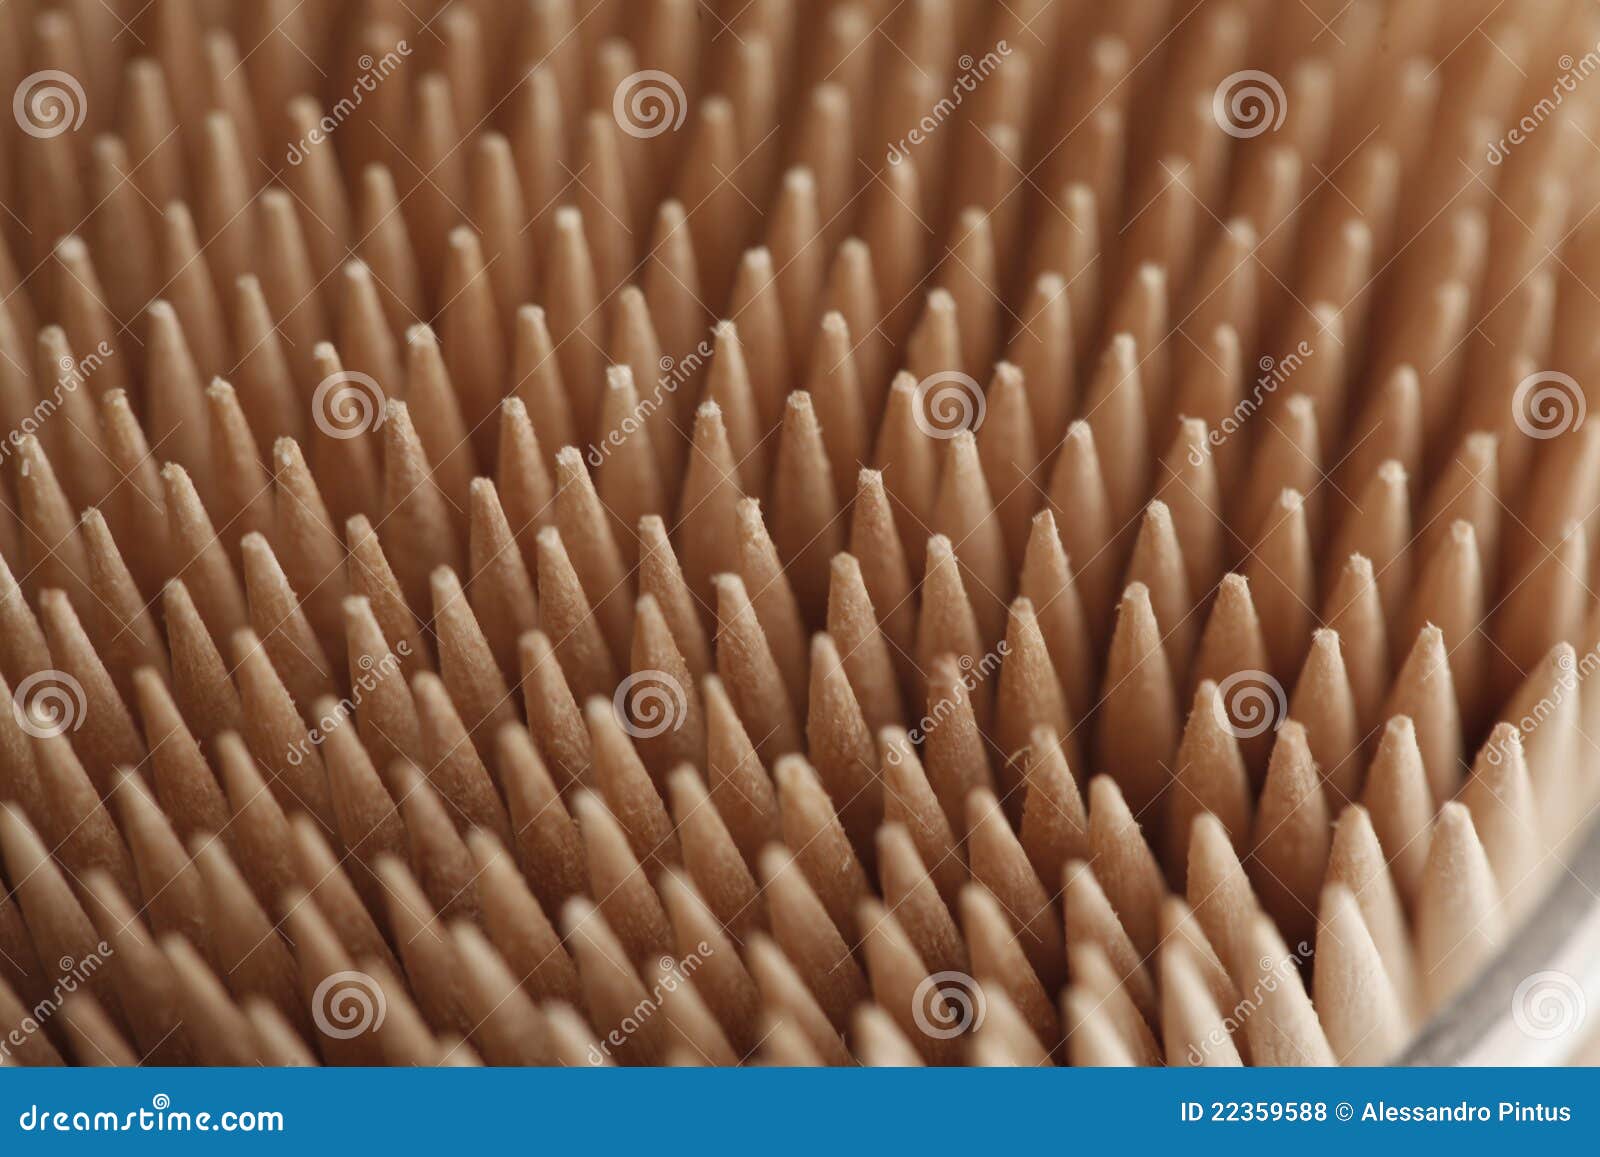 toothpicks